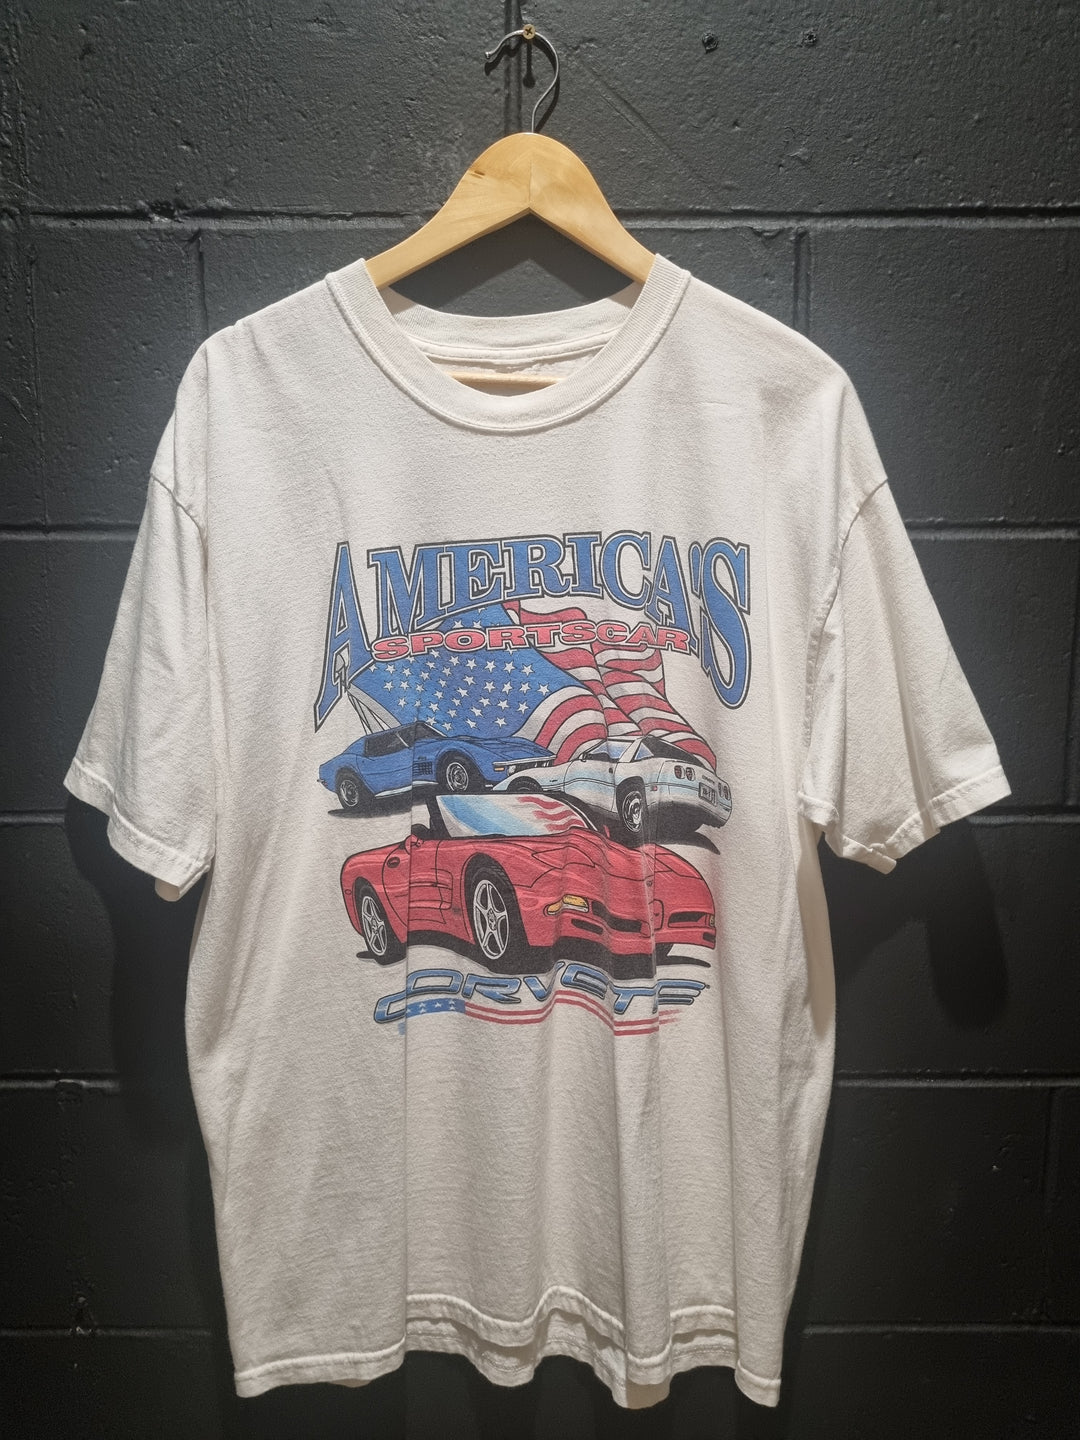 America's Sportscar Corvettes XL